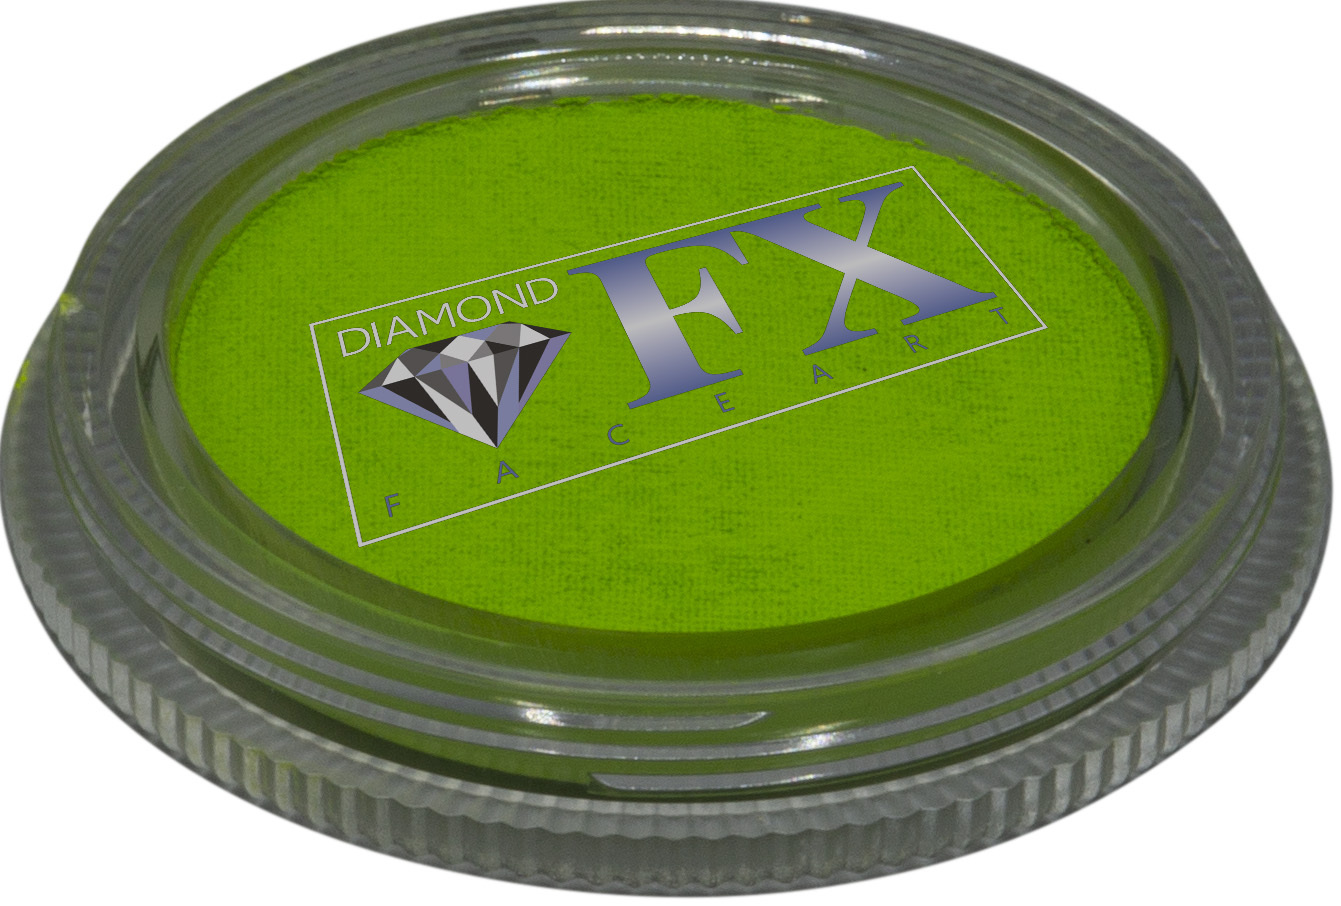 Diamond FX Light Green 30g - Small Image